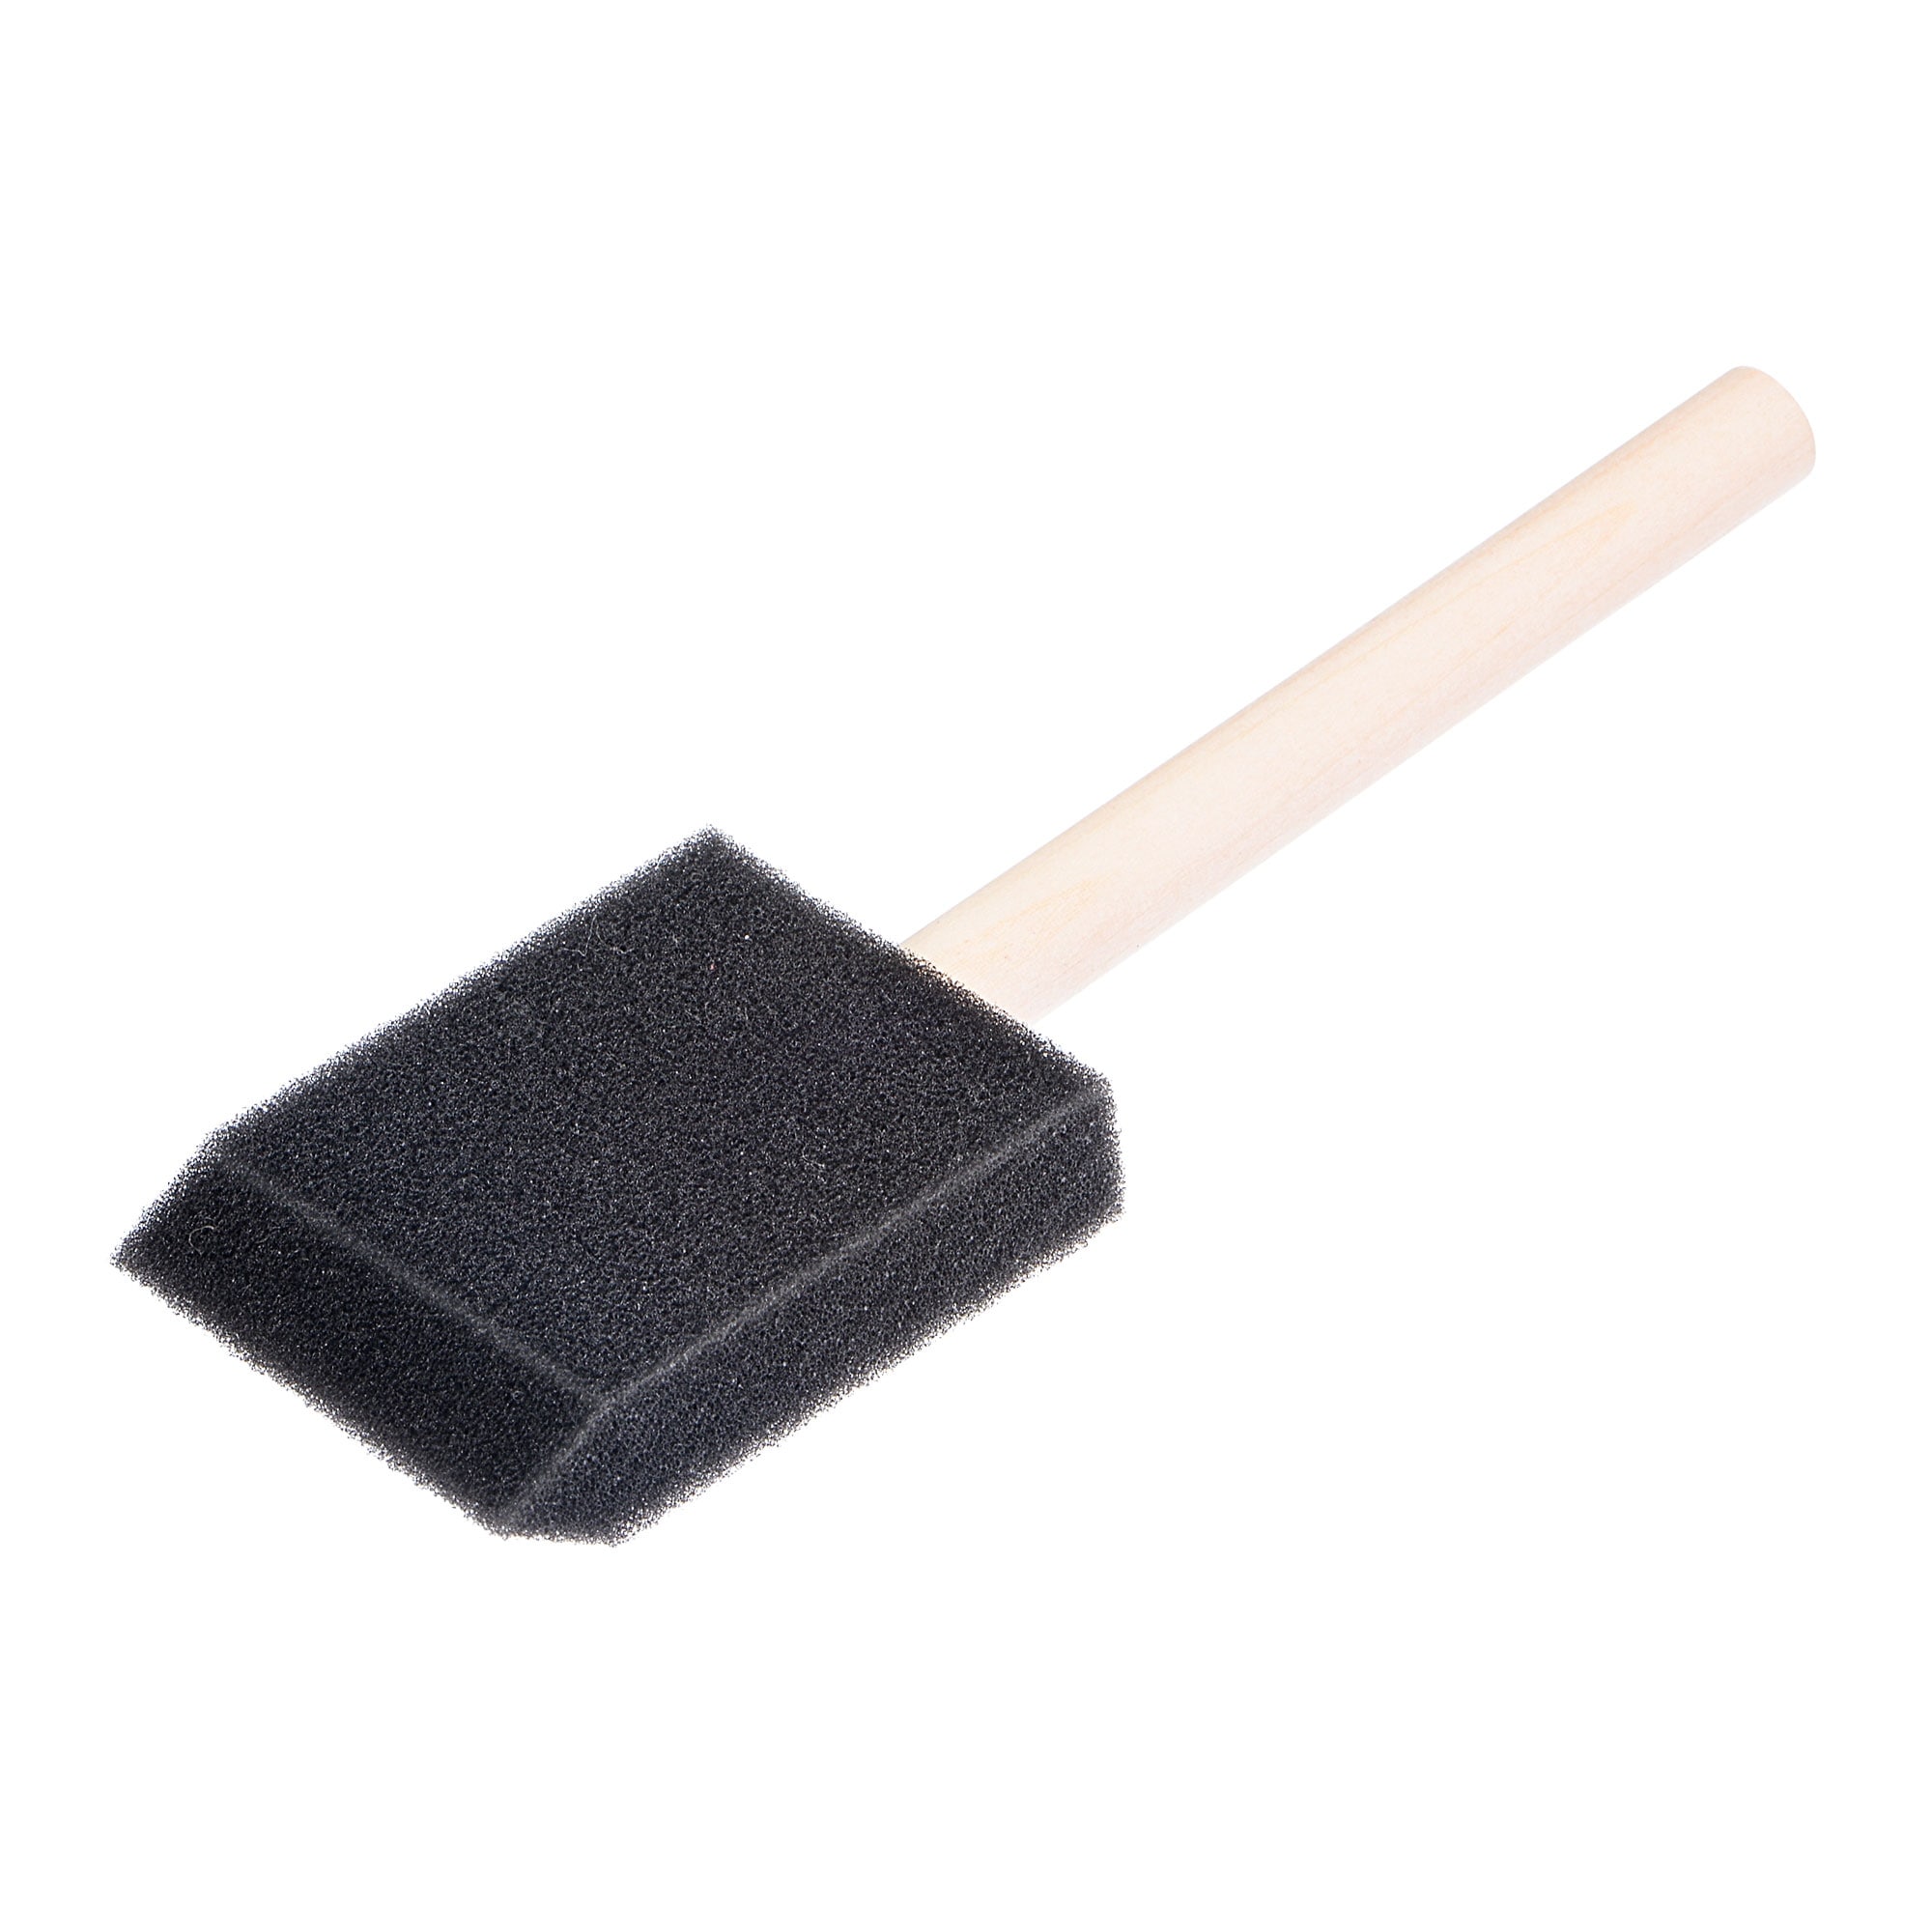 2 Inch Foam Paint Brushes Bevel Edge w Wood Handle Sponge Brush 48Pcs -  Black - 2 - Bed Bath & Beyond - 37404354